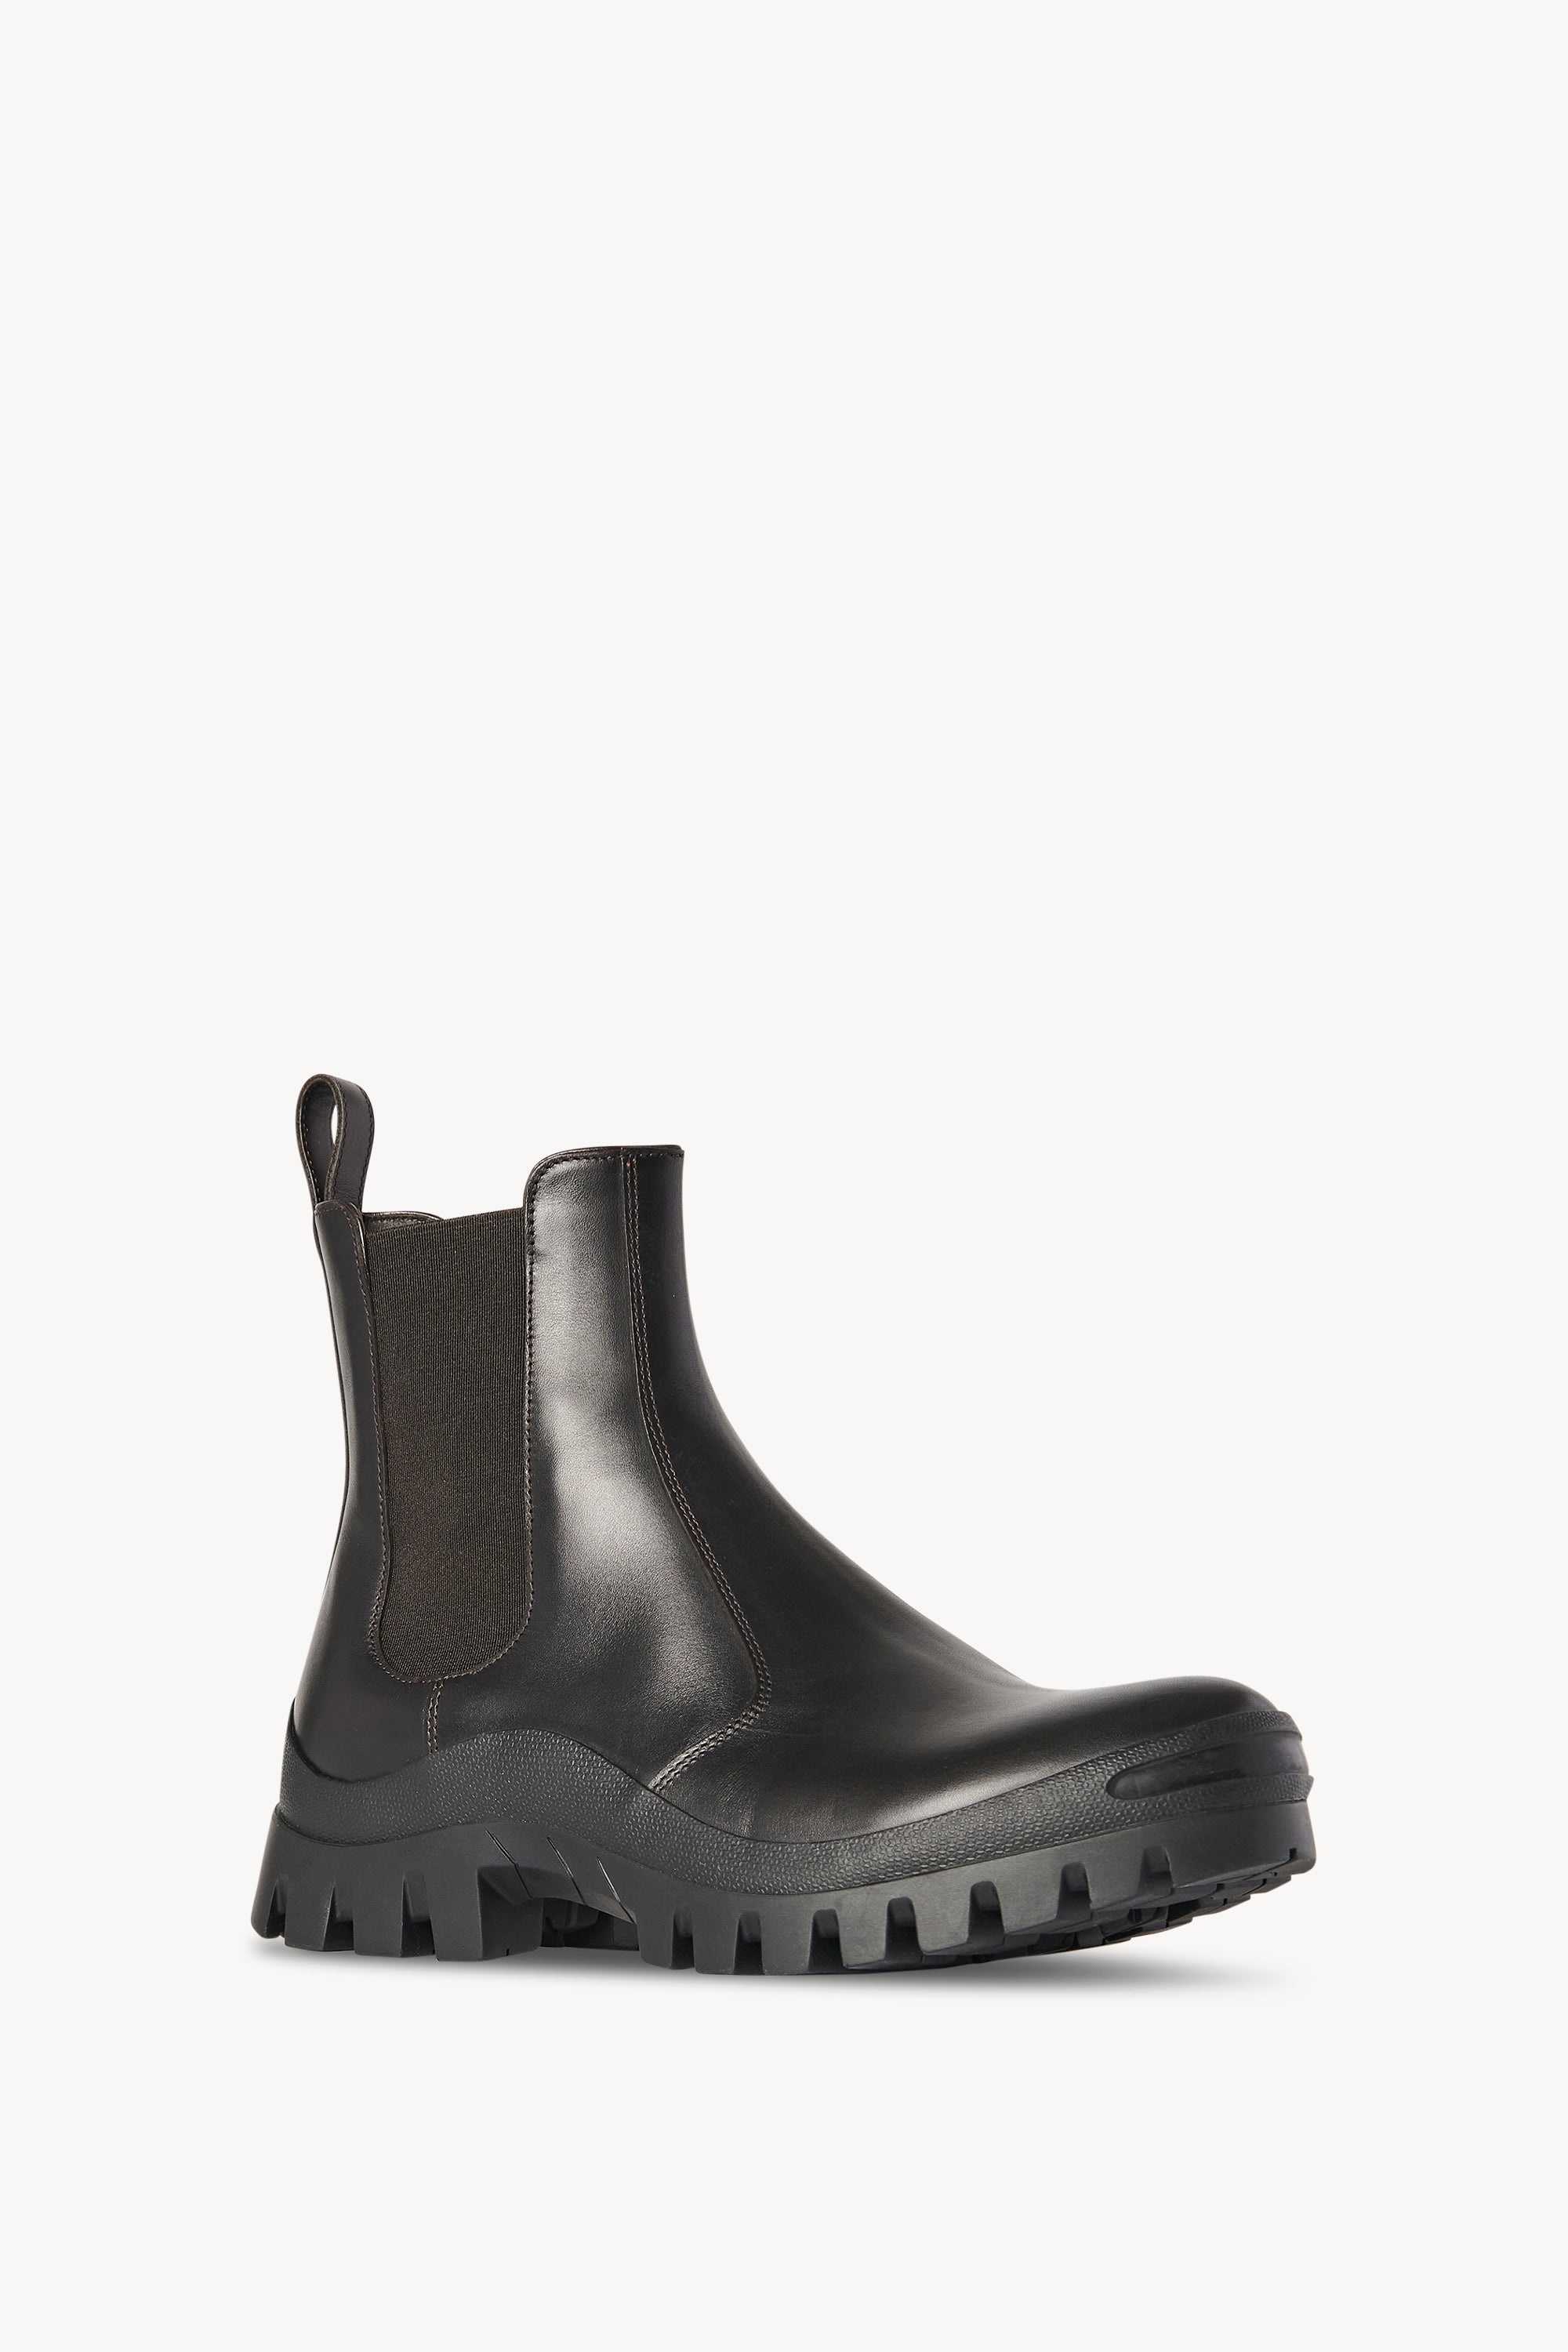 Greta Winter Boot in Leather - 2